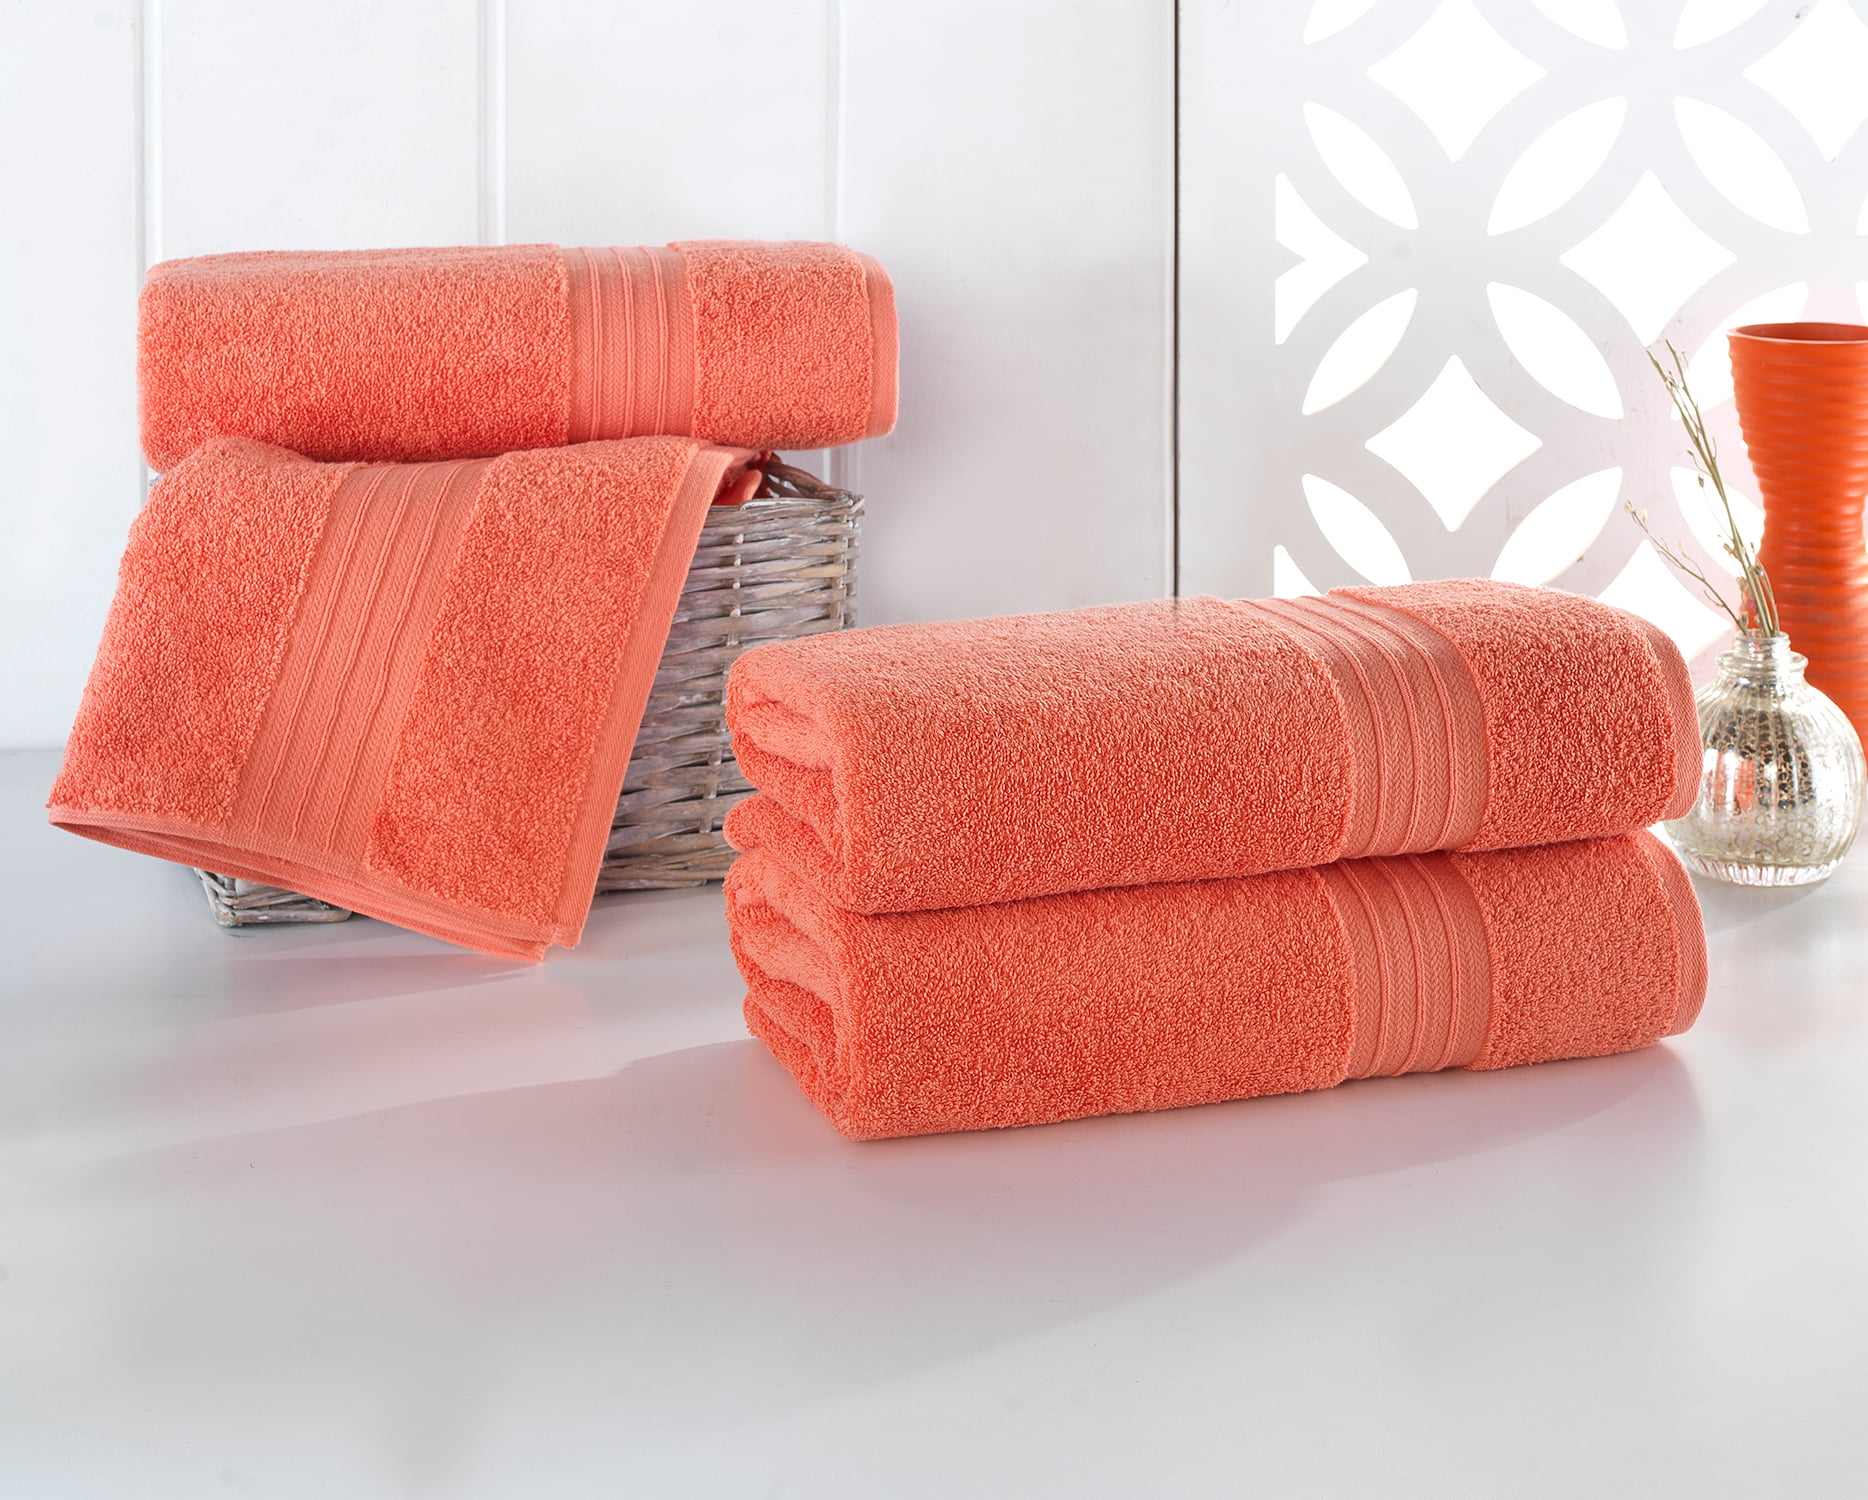 Eco Towels Premium Hotel & Spa Bath Towel Cotton, 30 inch x 56 inch,Set of 4 (Burgundy), Red